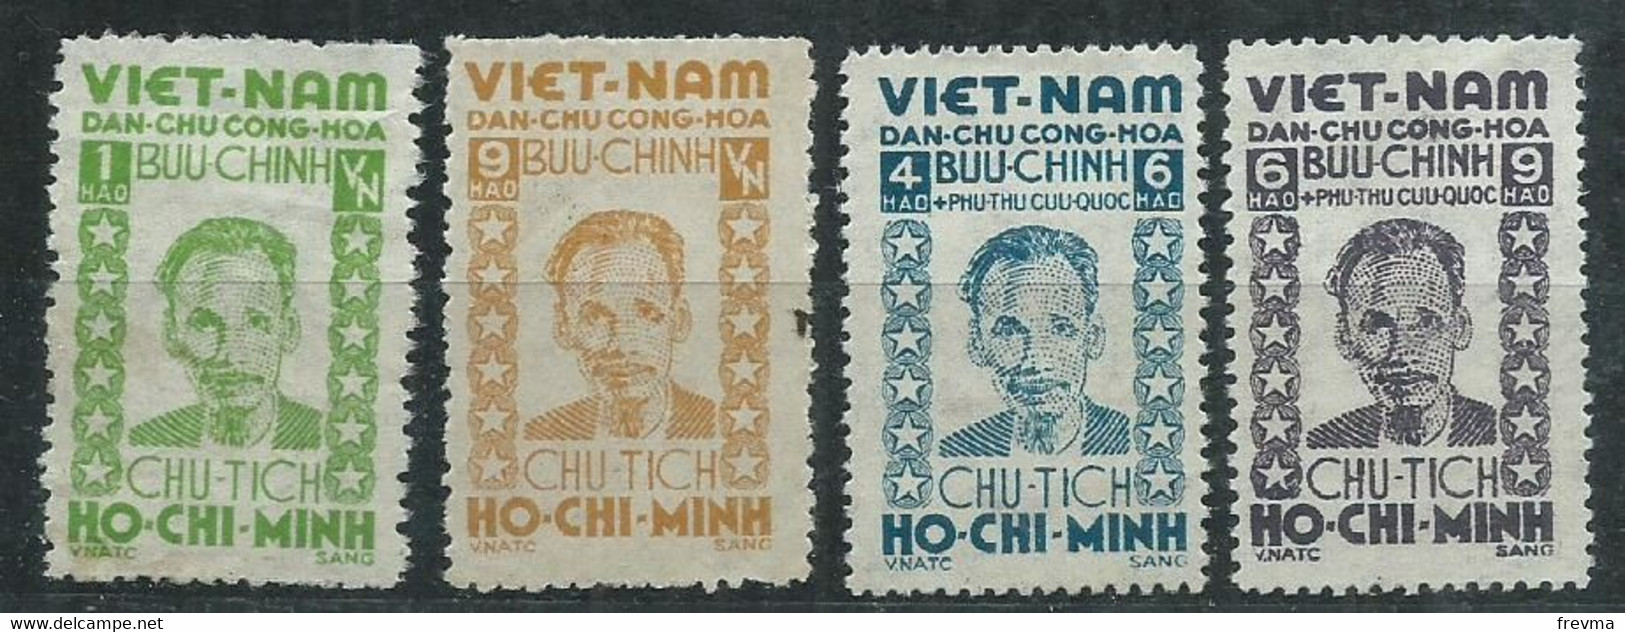 Timbre Vietnam 1946 Ho Chi Minh - Viêt-Nam